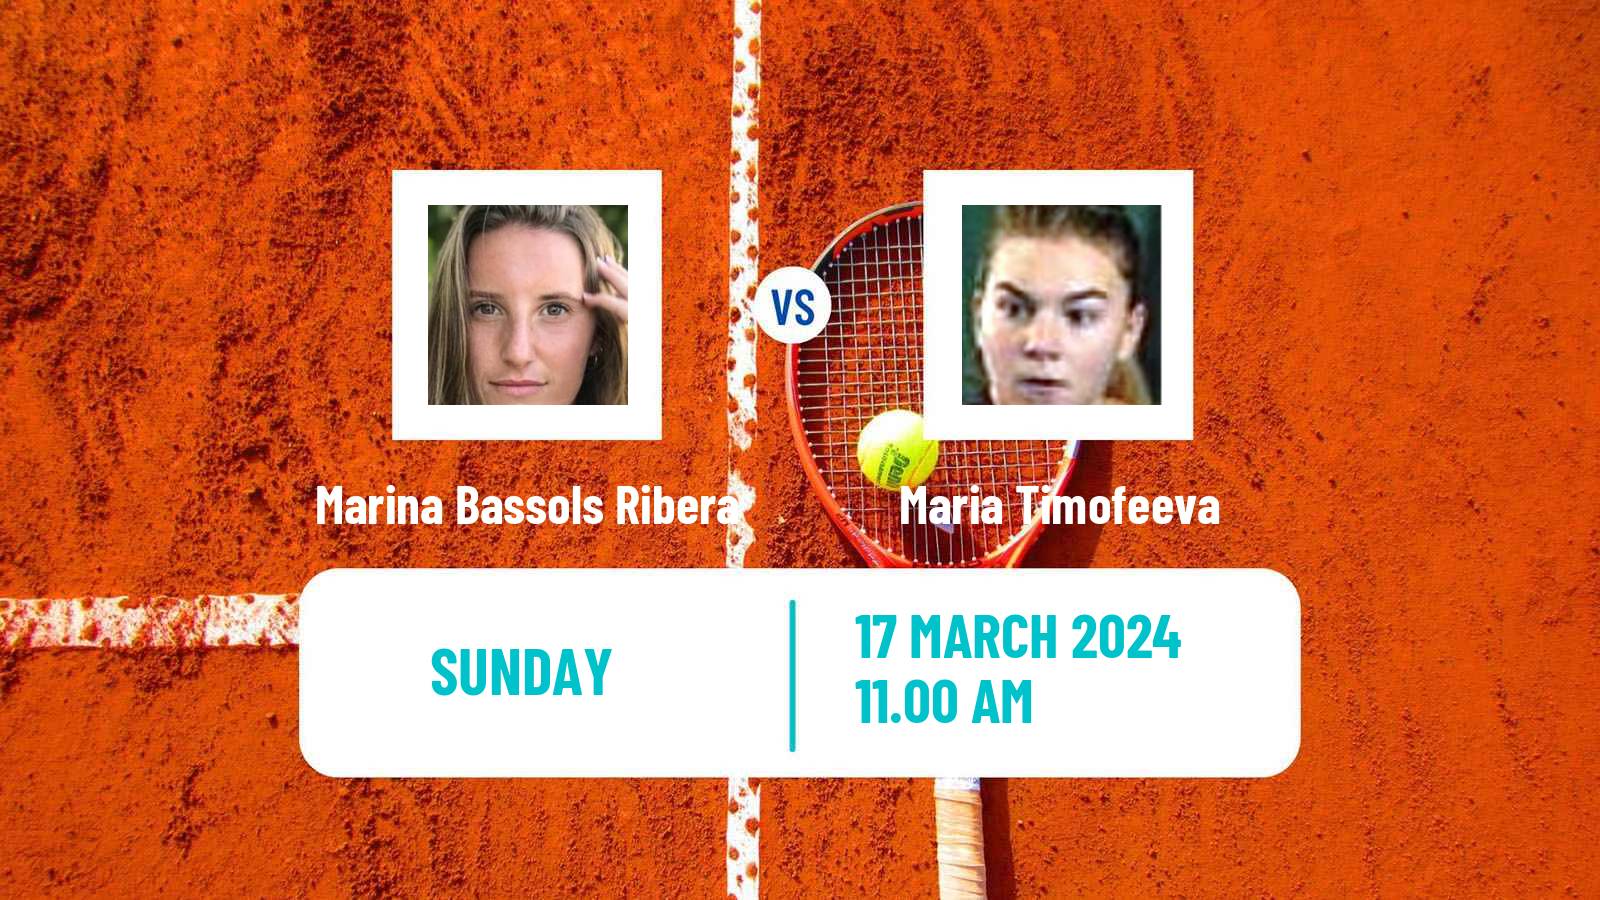 Tennis WTA Miami Marina Bassols Ribera - Maria Timofeeva